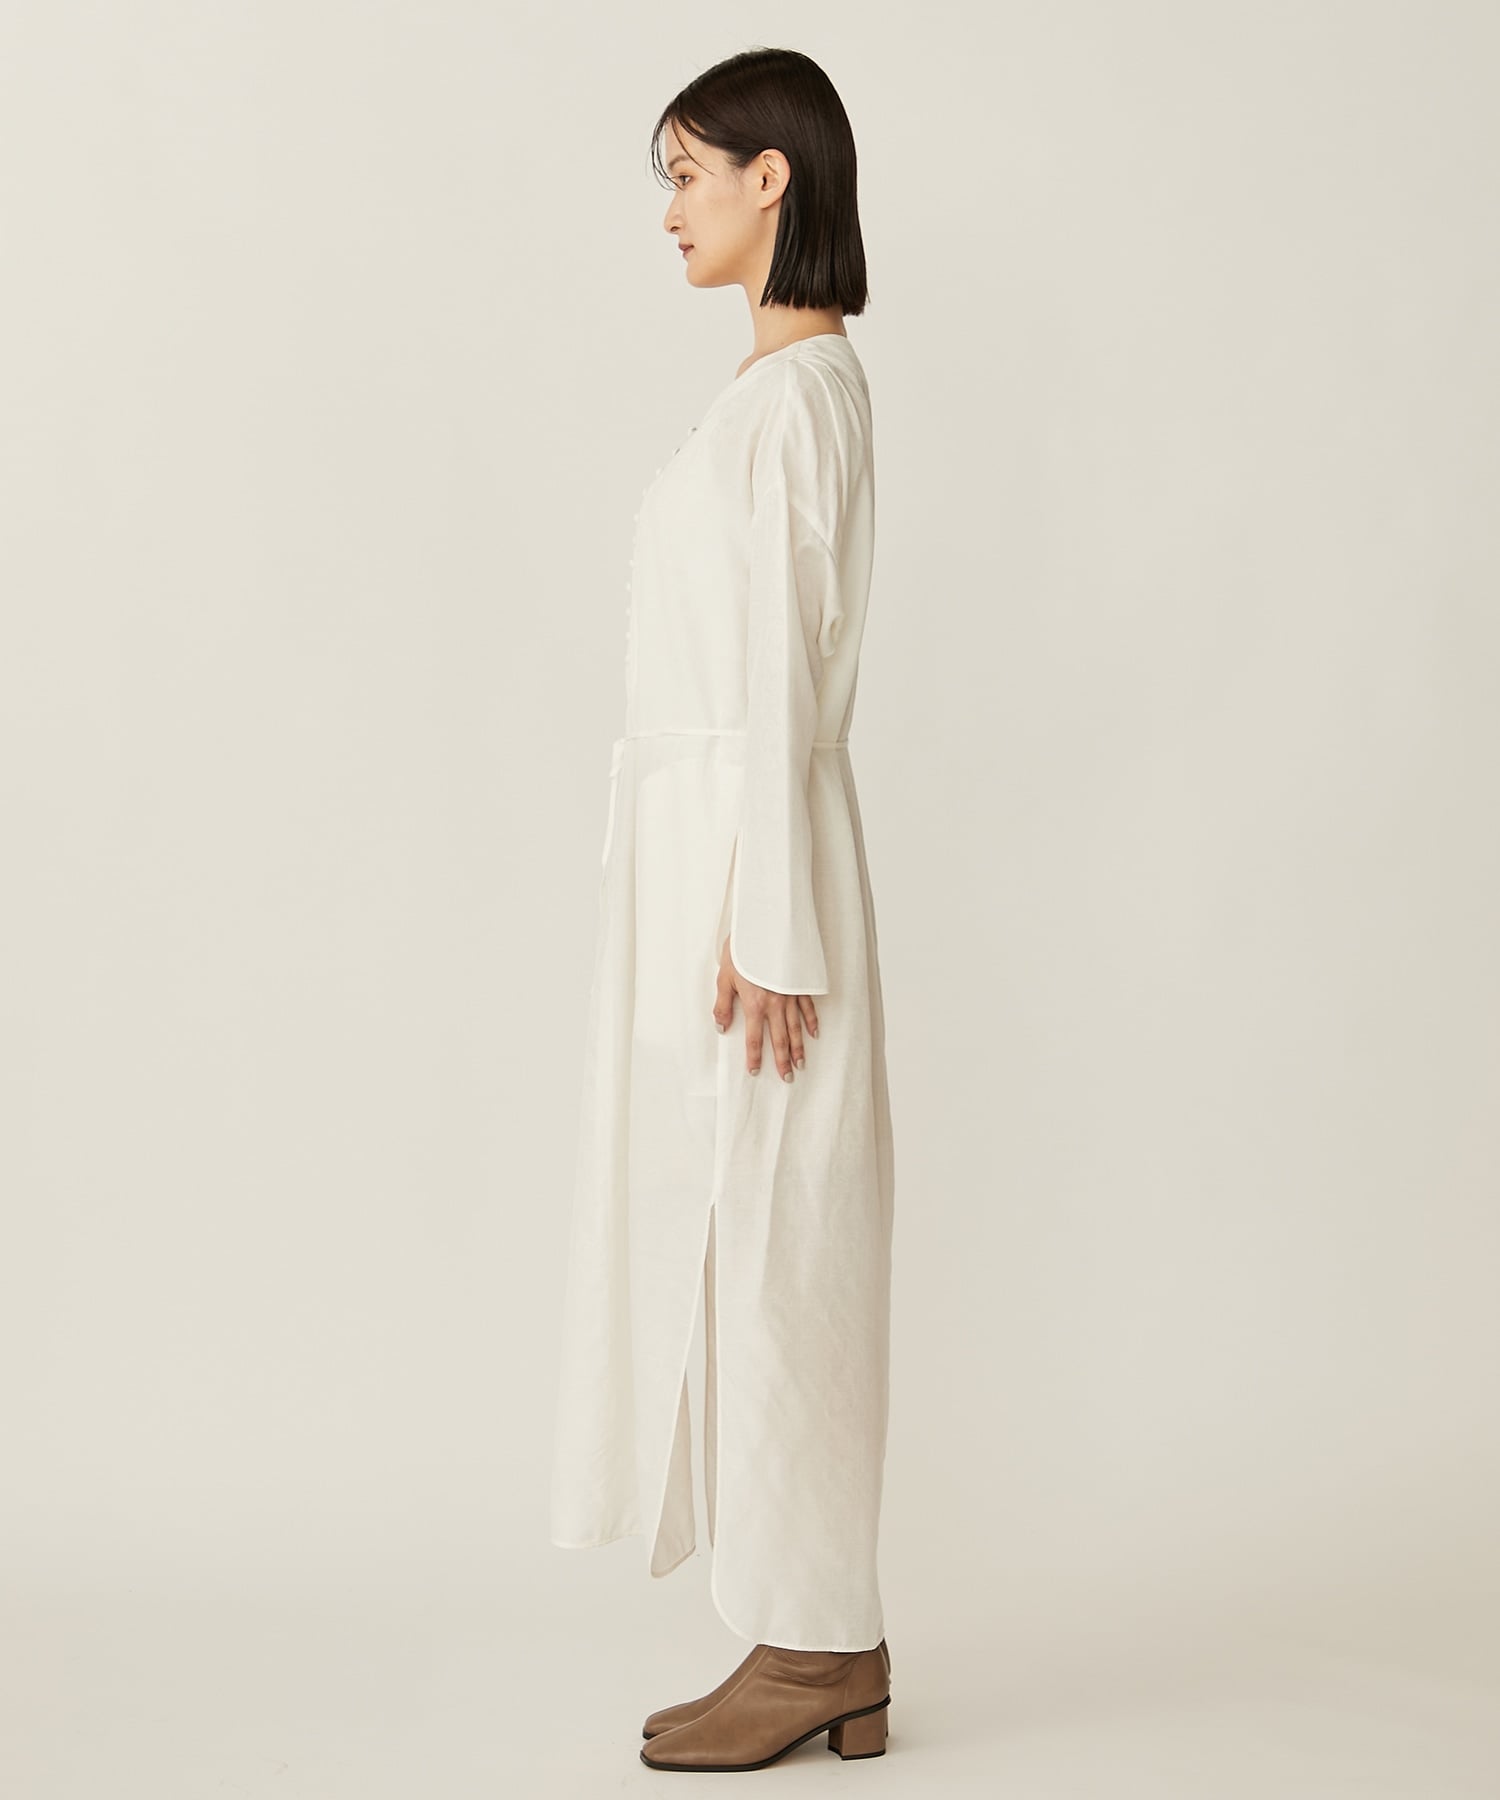 Floral Pattern Silk Rayon Jacquard I-Line Dress(1 WHITE): Mame